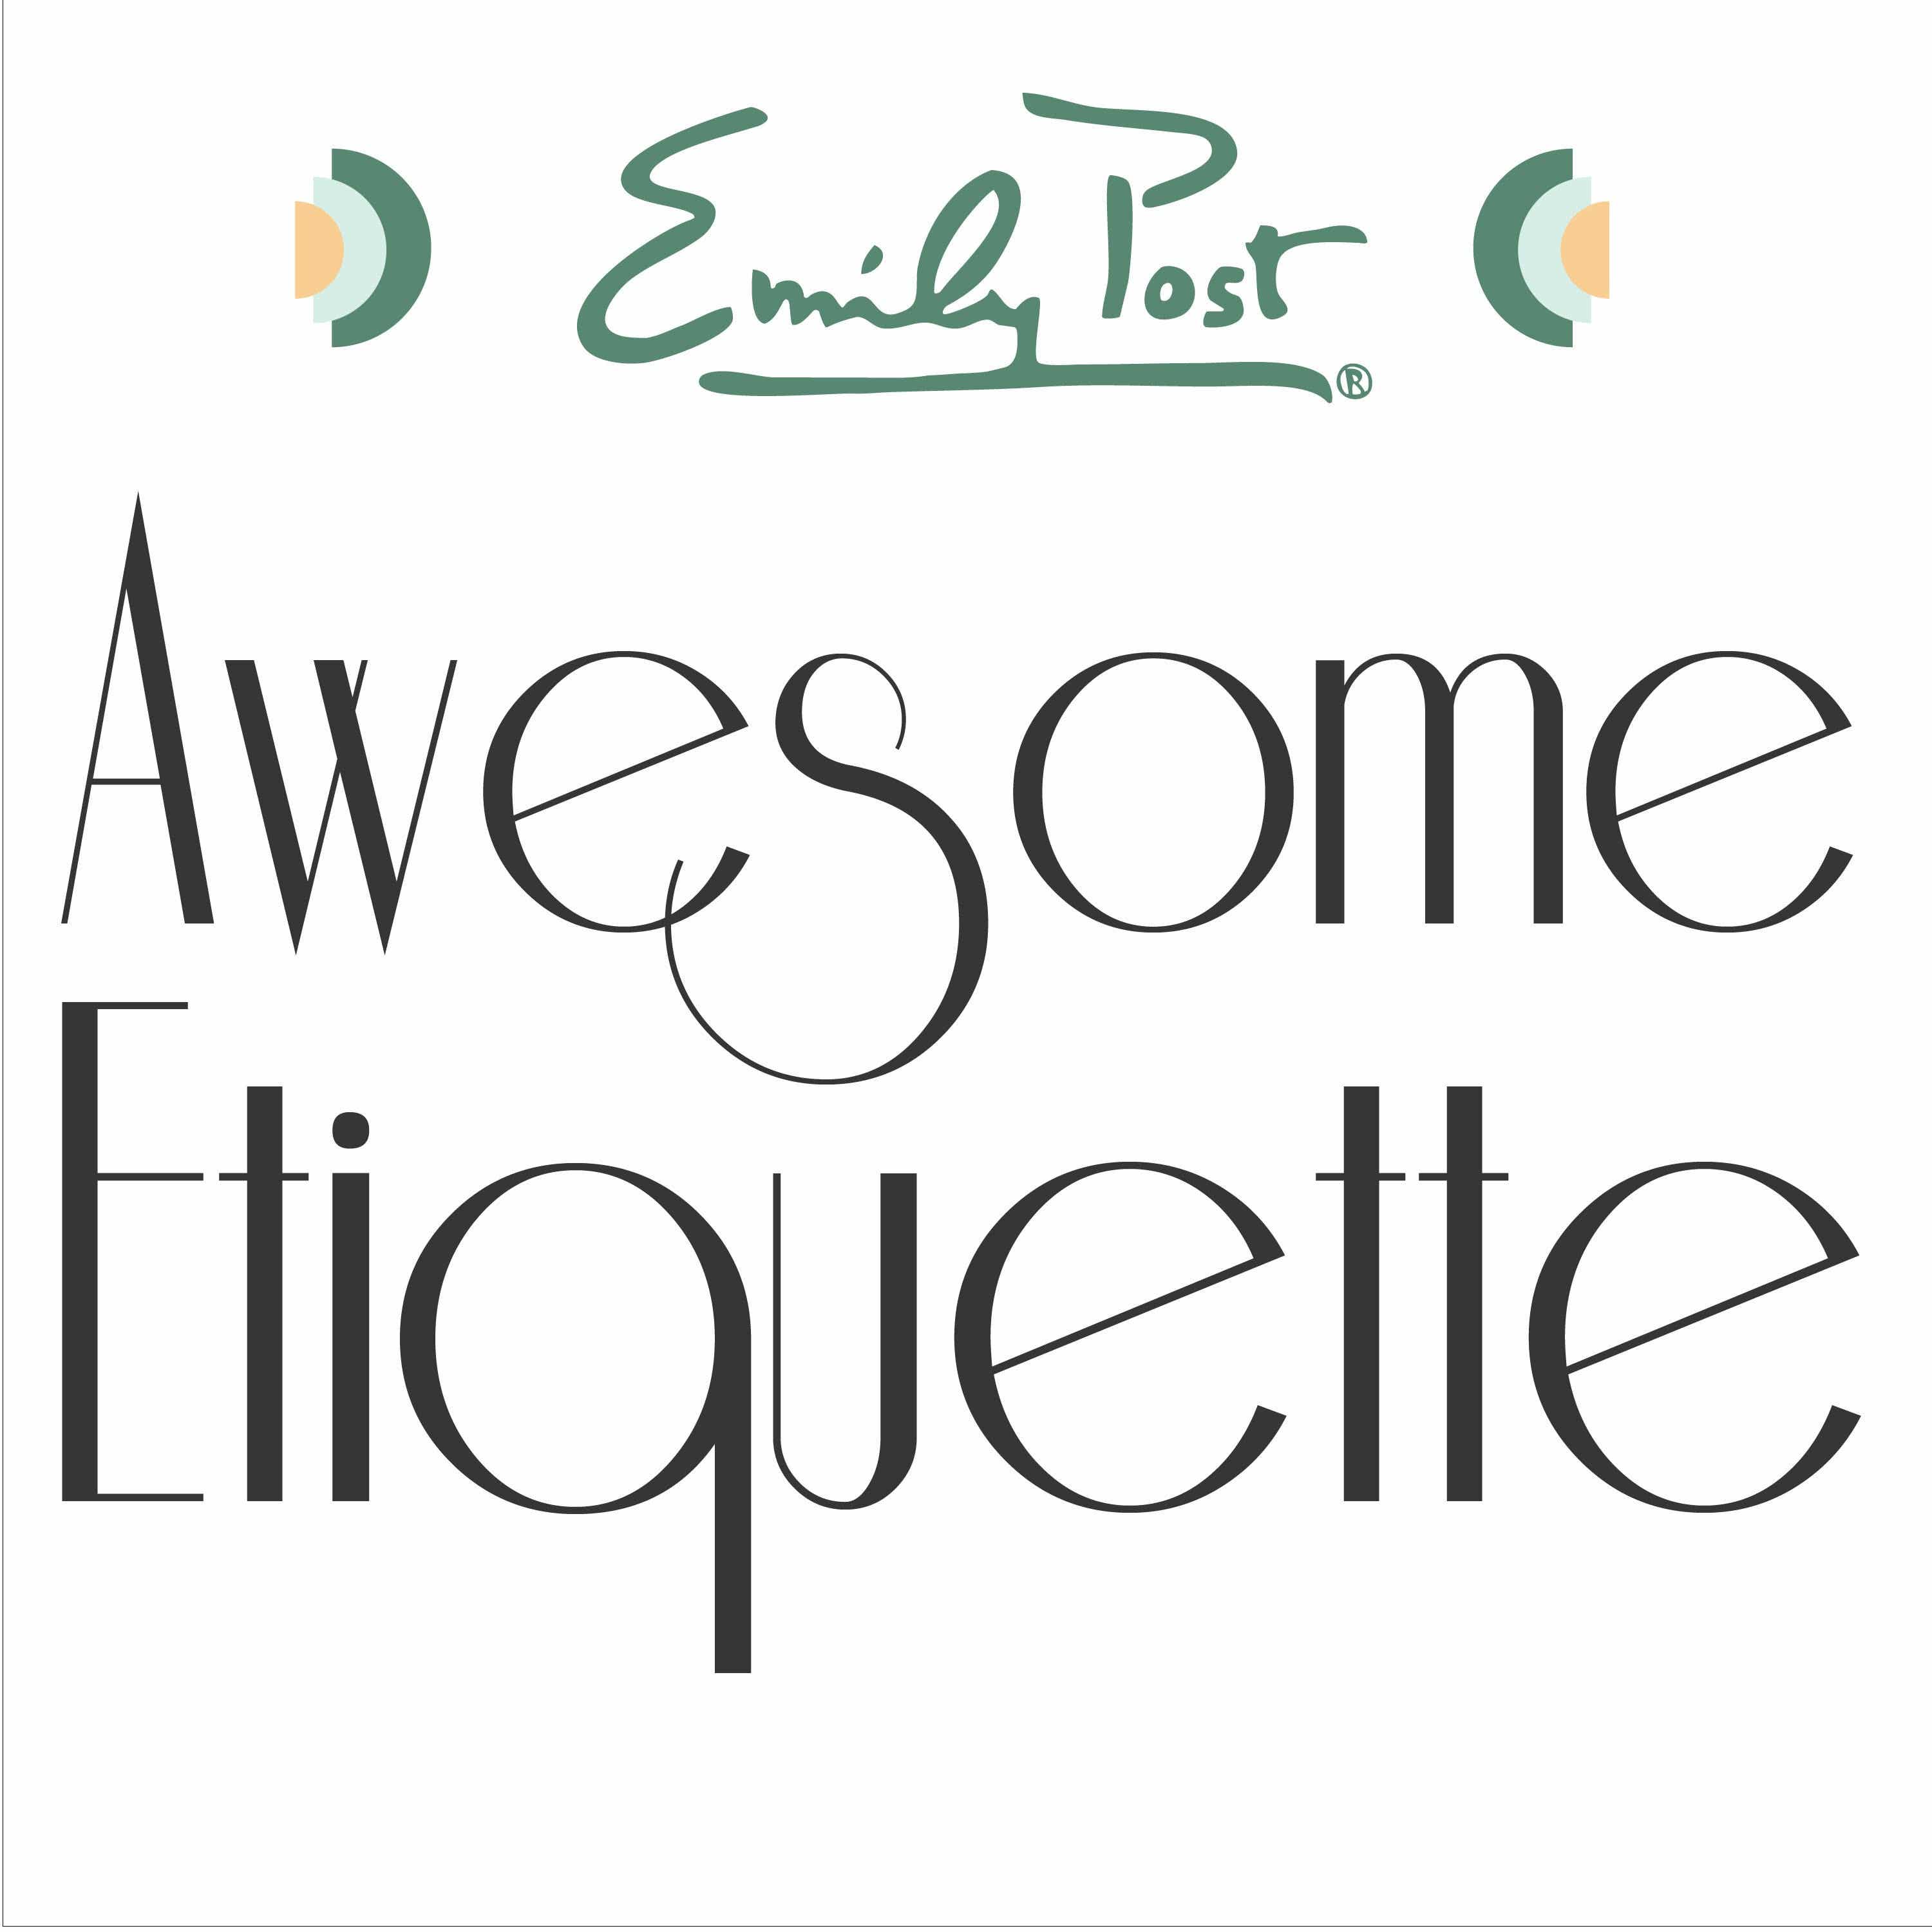 Awesome Etiquette (private feed for stevenpreece41@yahoo.co.uk)